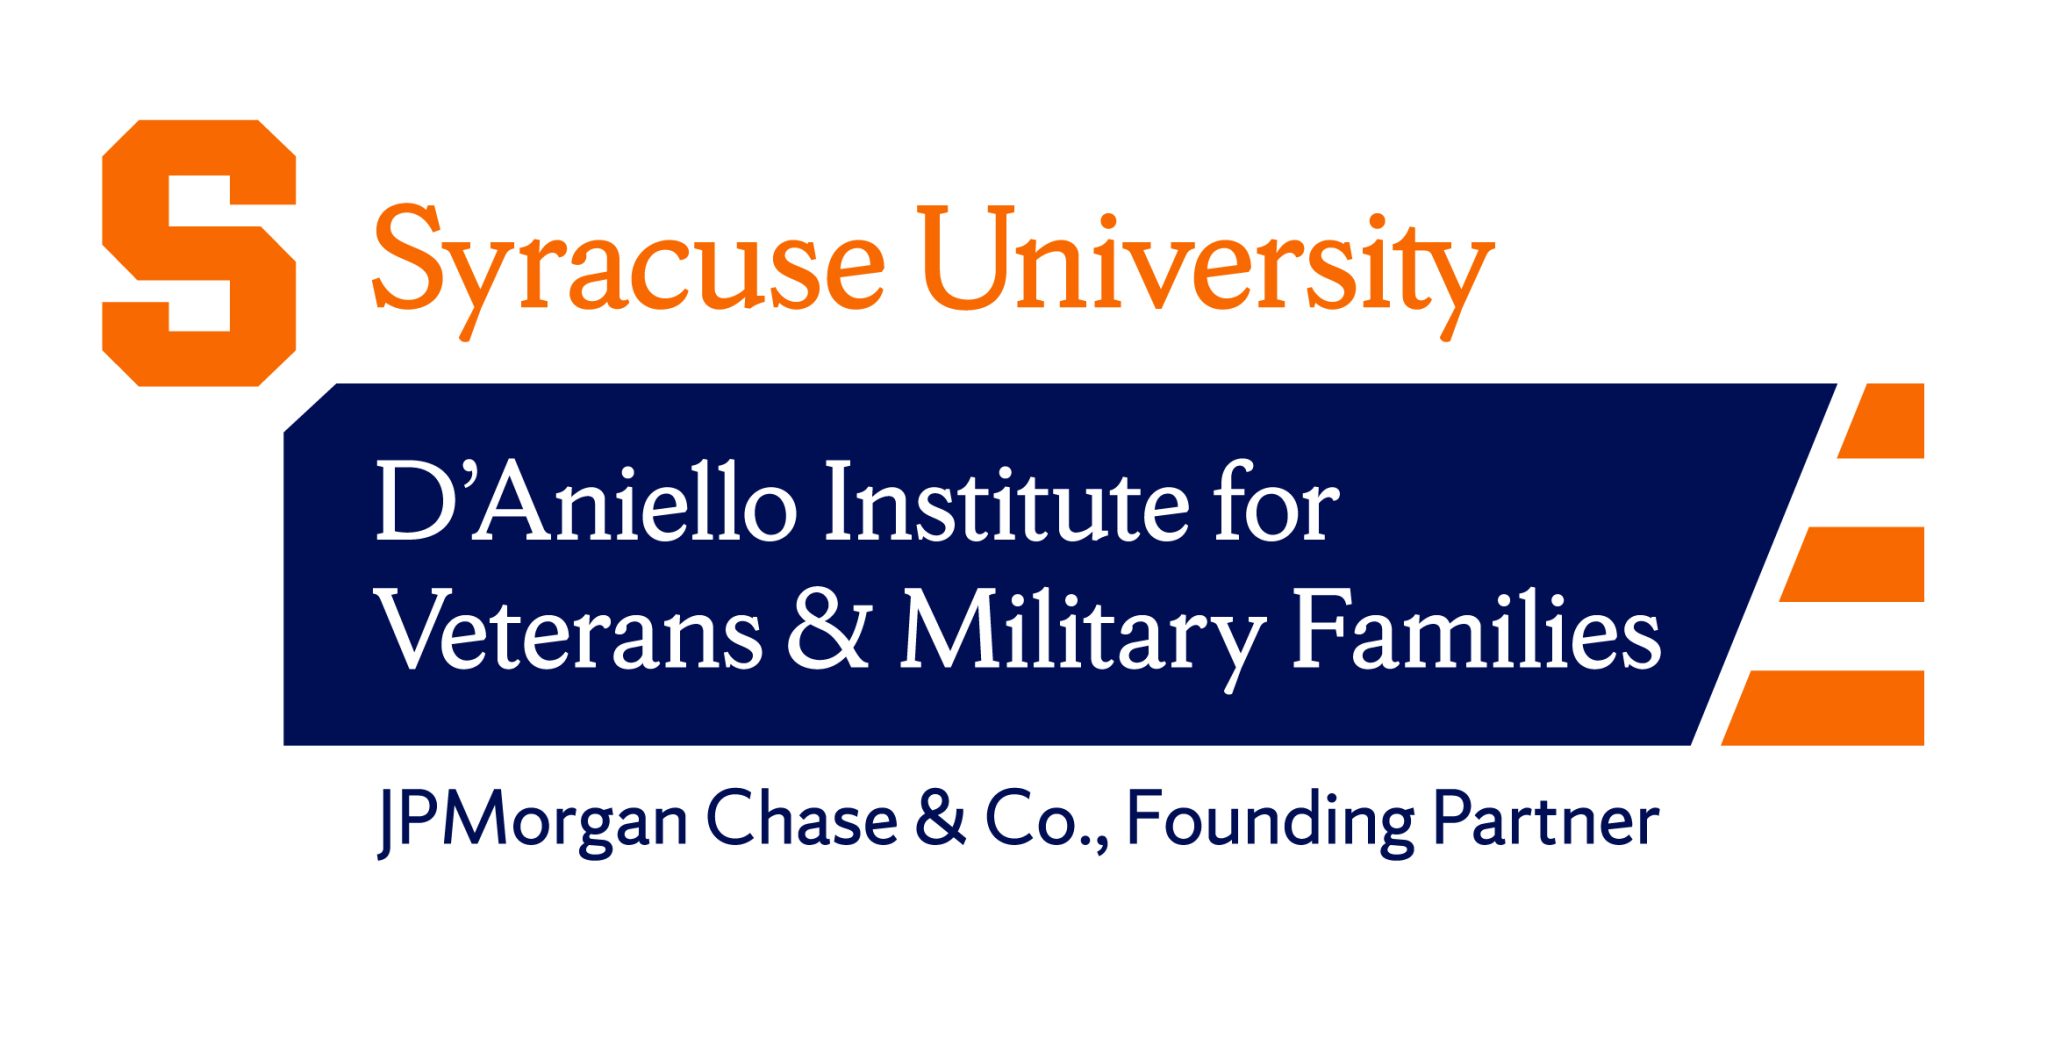 Syracuse University D'Aniello Institute for Veterans & Military Families logo